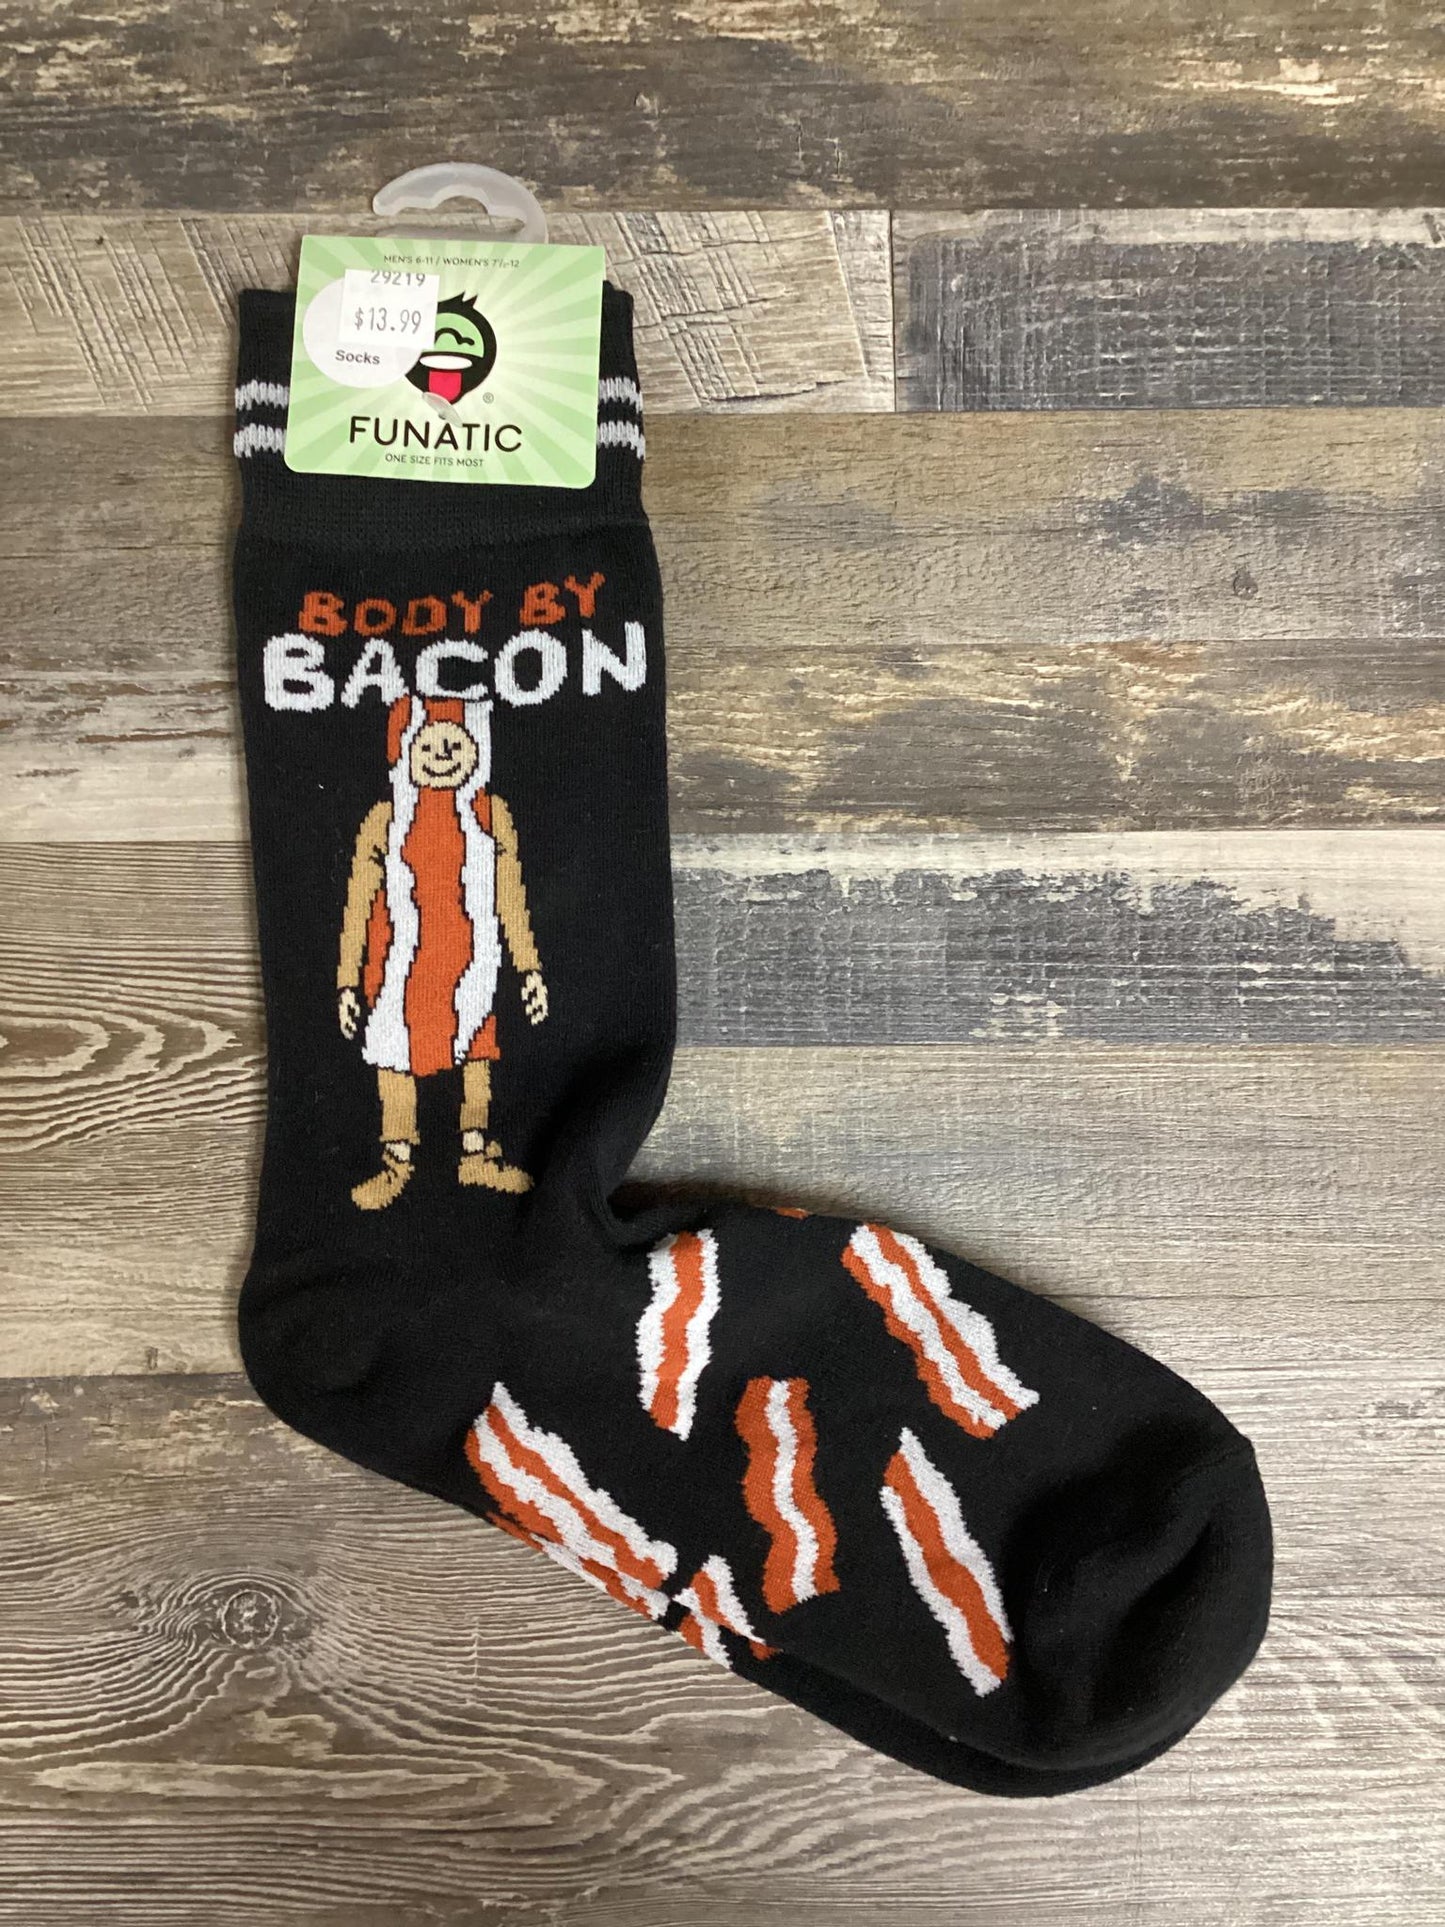 "Body By Bacon" Socks - Funatic